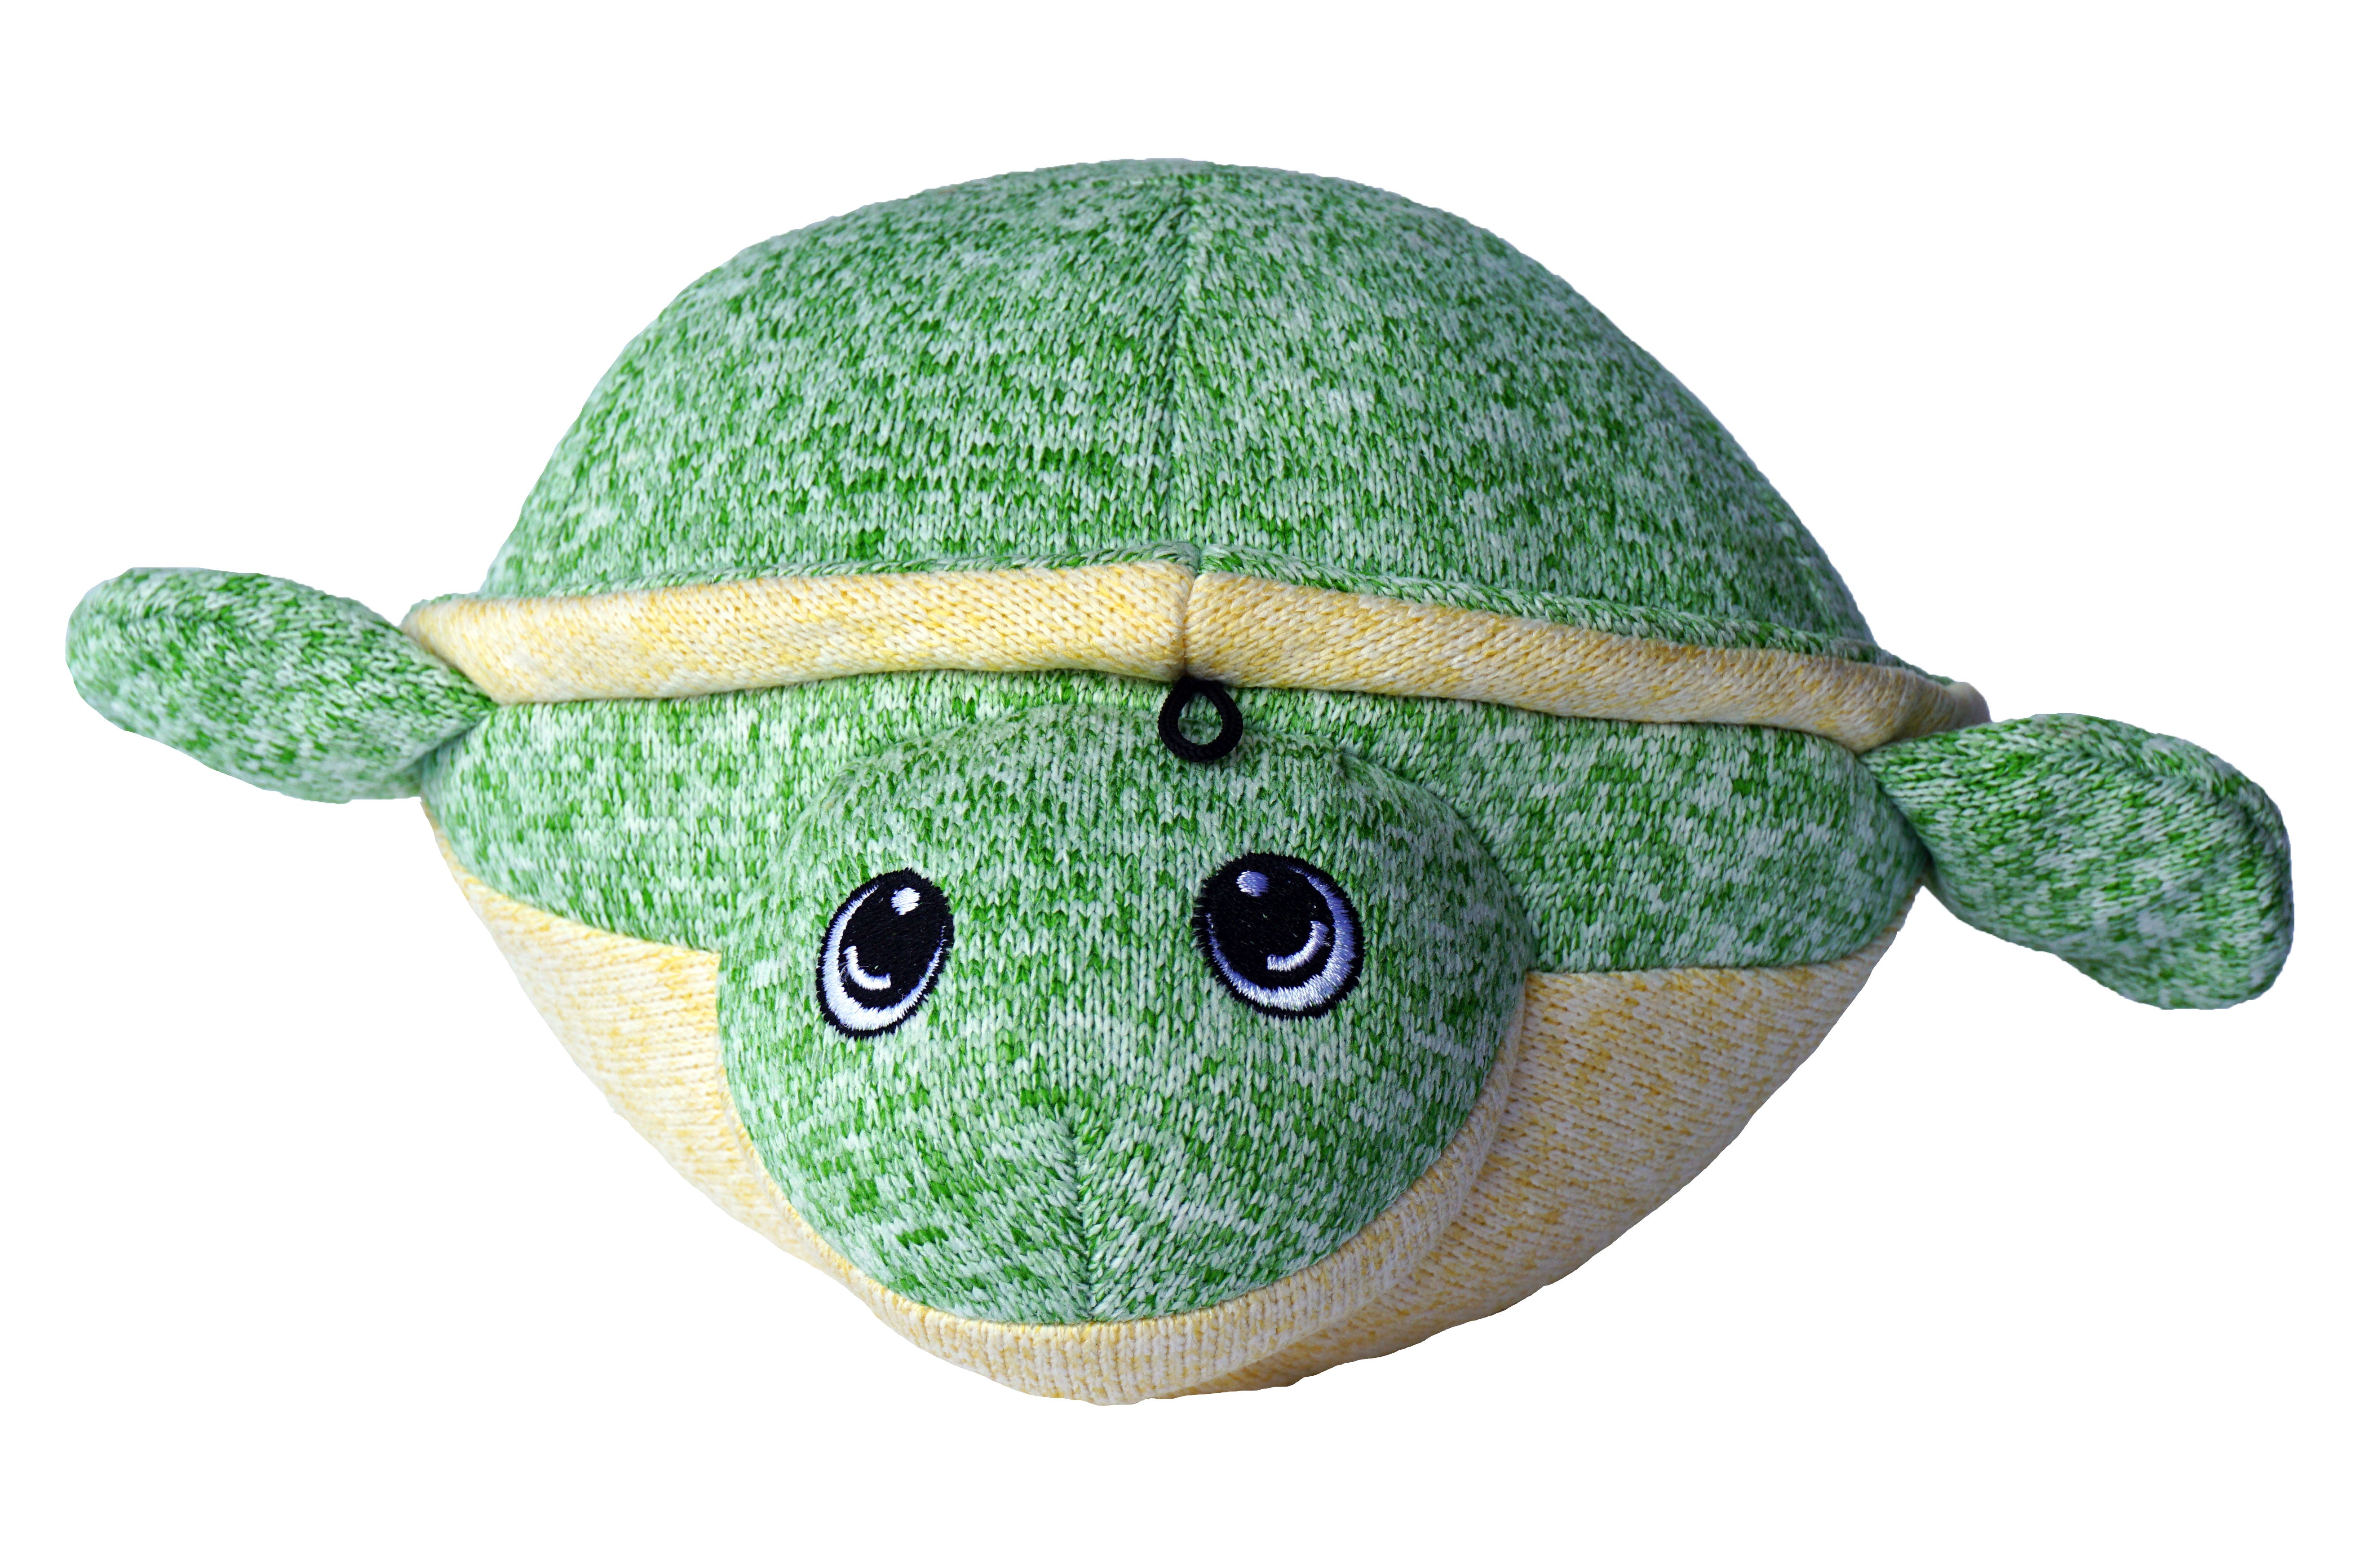 Gor Hugs Softball Turtle (19cm)